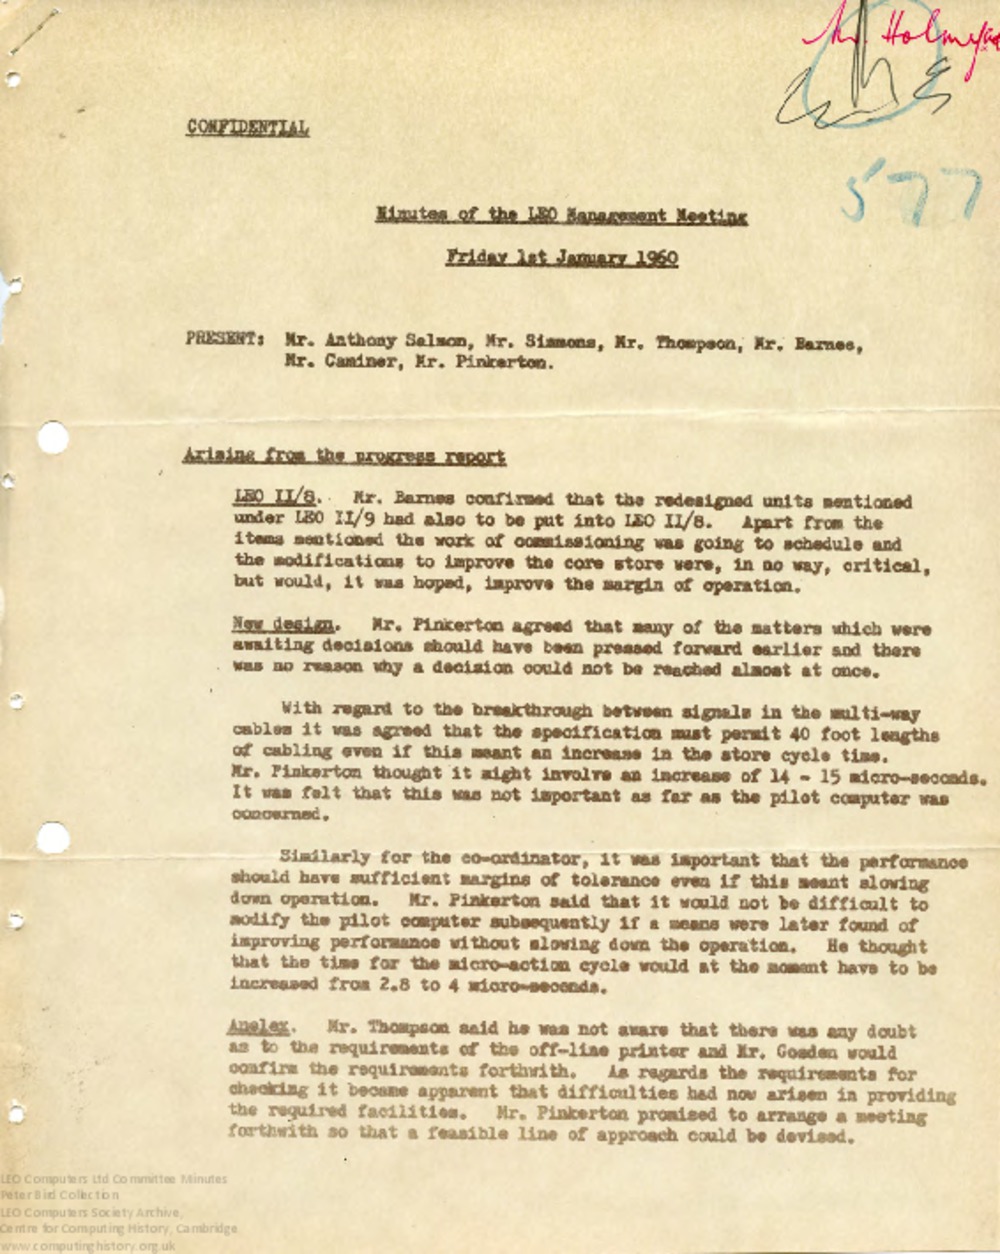 Article: 64396 LEO Management Meeting, 1960 first quarter (Jan-Mar 1960)